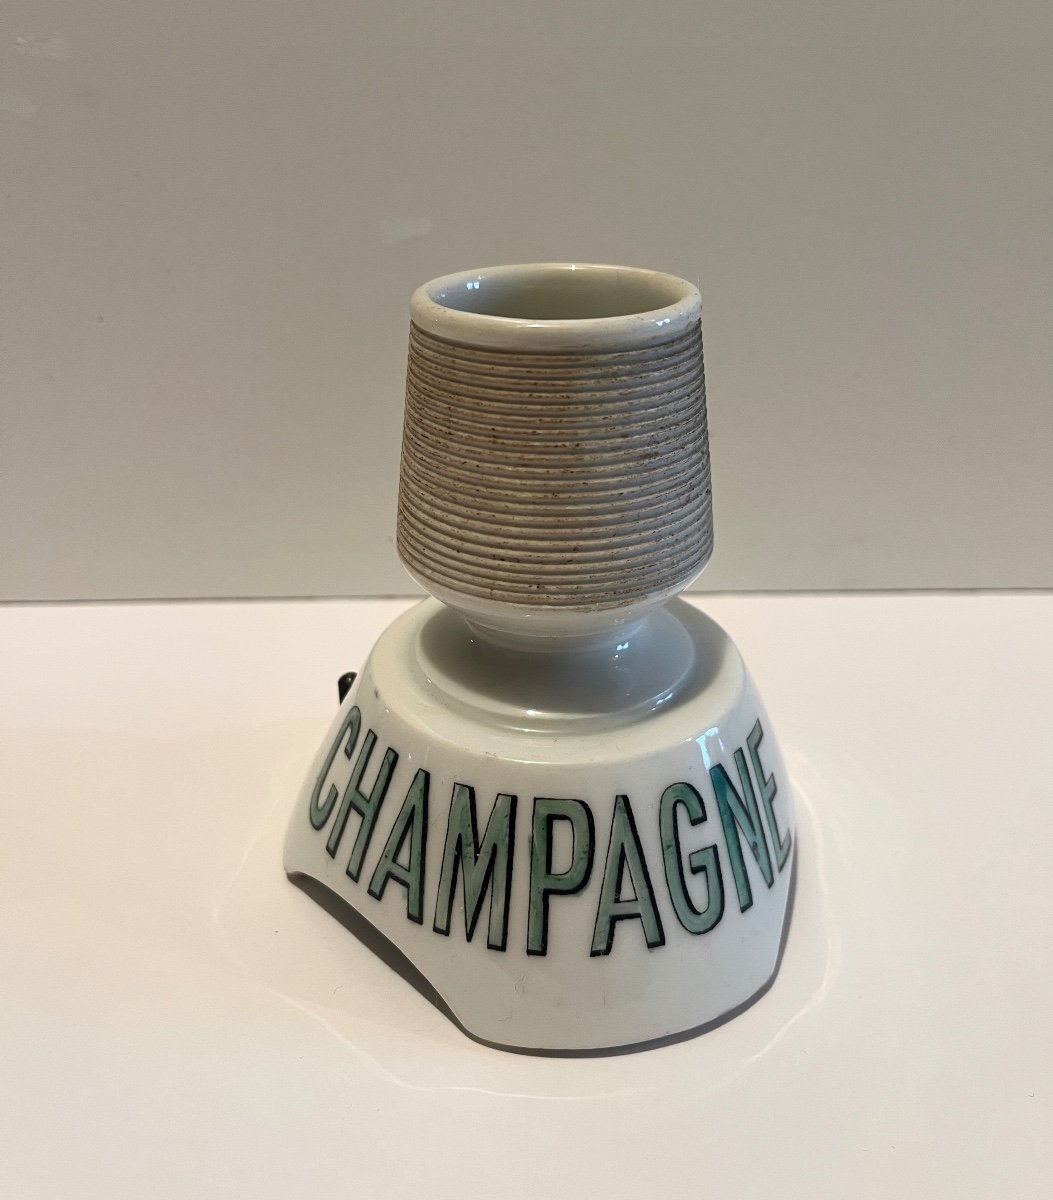 Rare Champagne Mercier Porcelain Advertising Pyrogen-photo-1